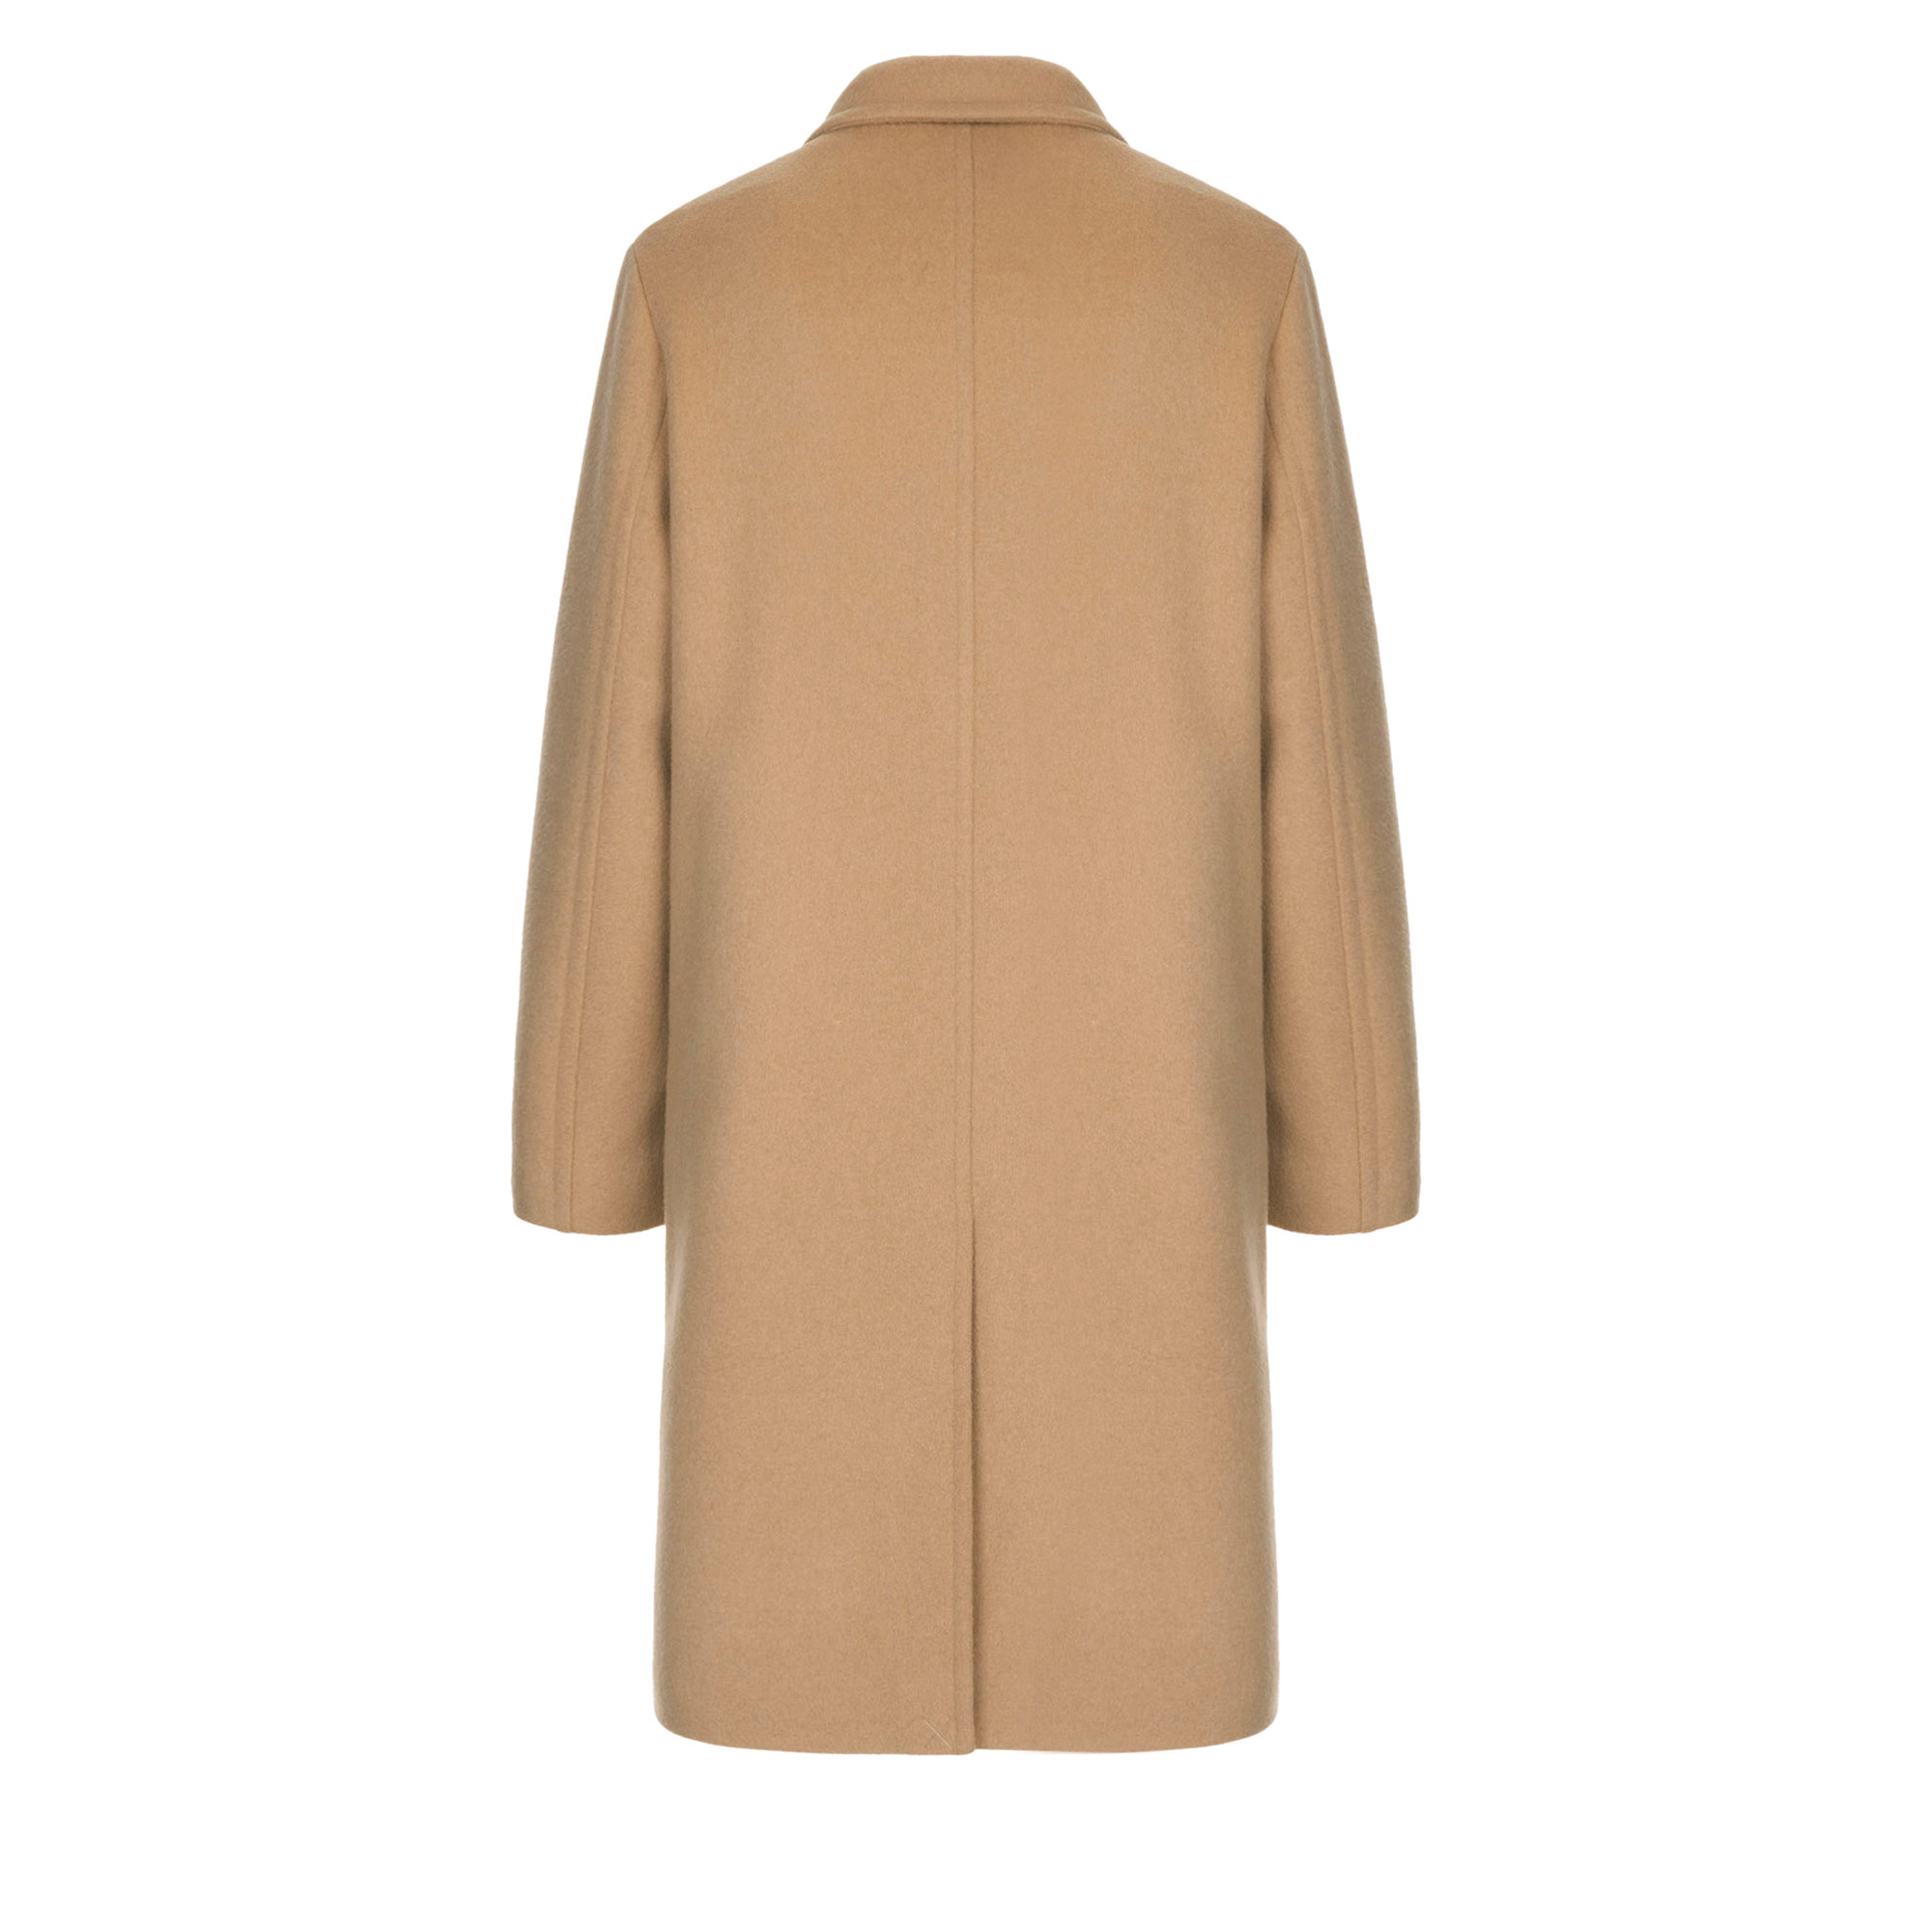 hidden button wool single coat / beige